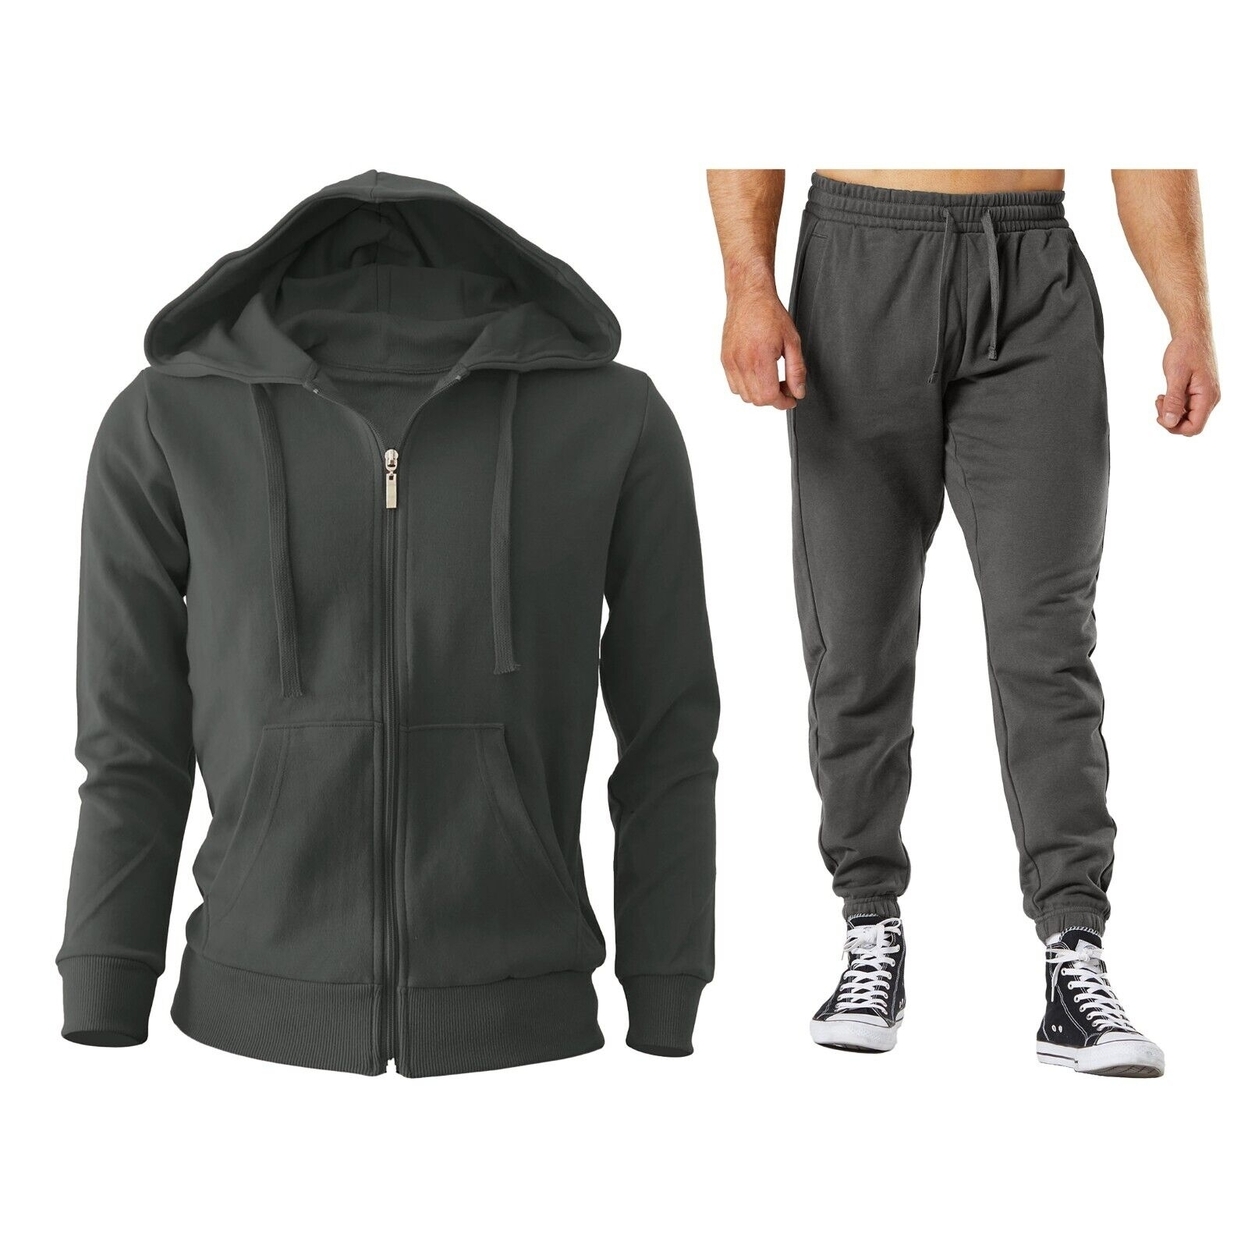 4-Piece: Men's Winter Warm Cozy Athletic Multi-Pockets BIG & TALL Sweatsuit Set - Charcoal, 3xl